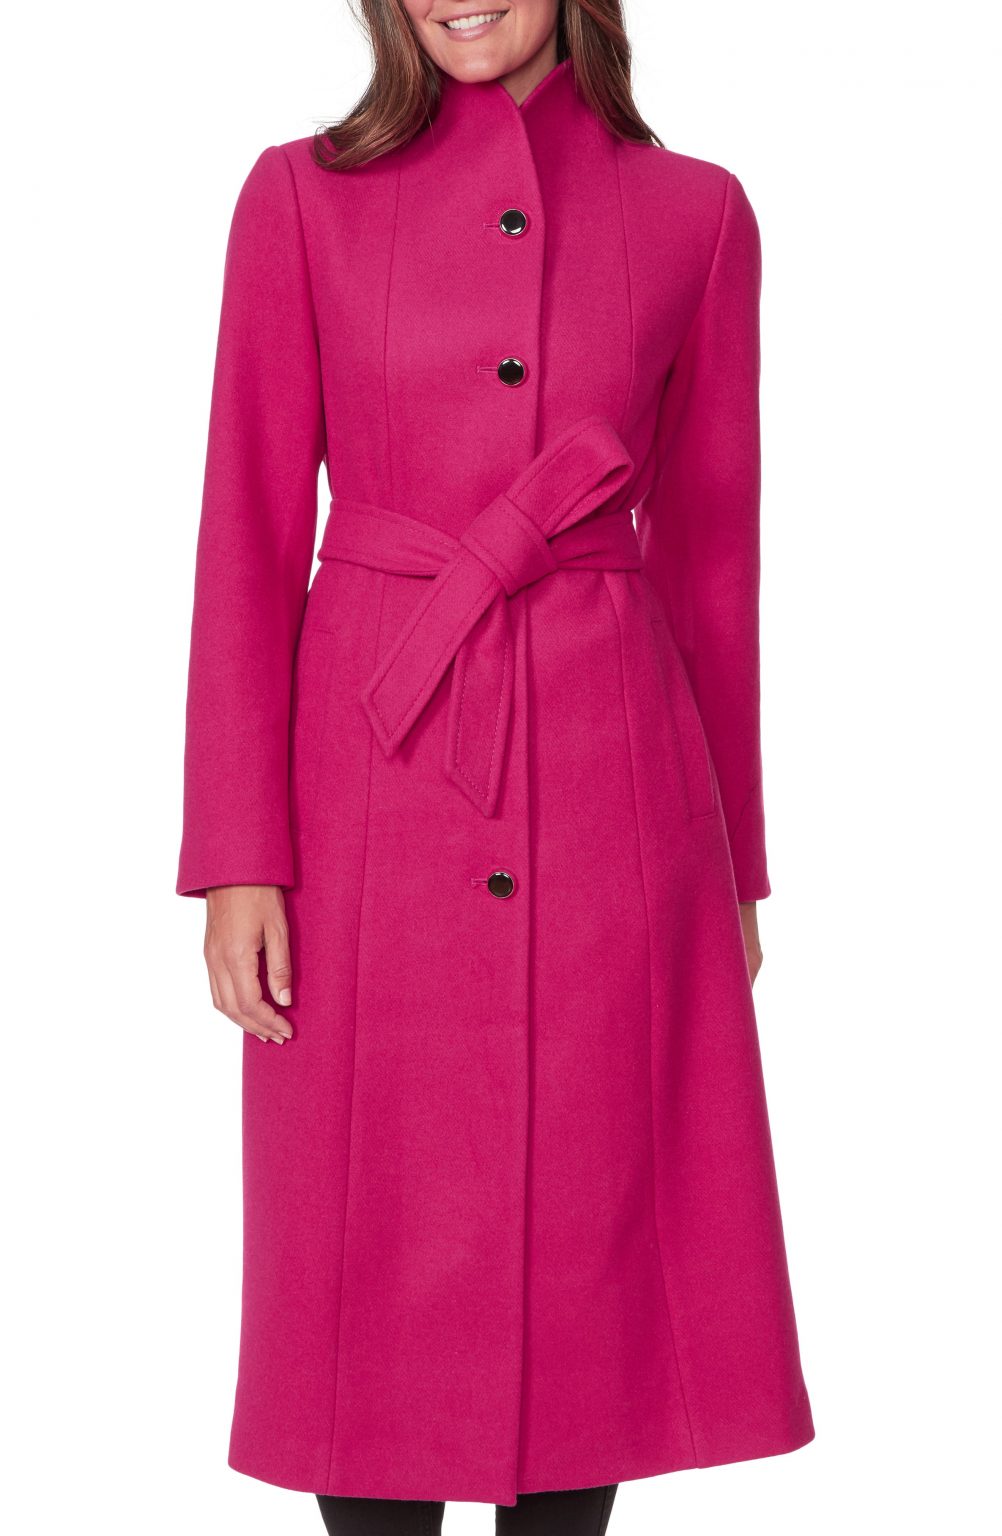 Women’s Kate Spade New York Belted Wool Blend Coat, Size Medium Pink